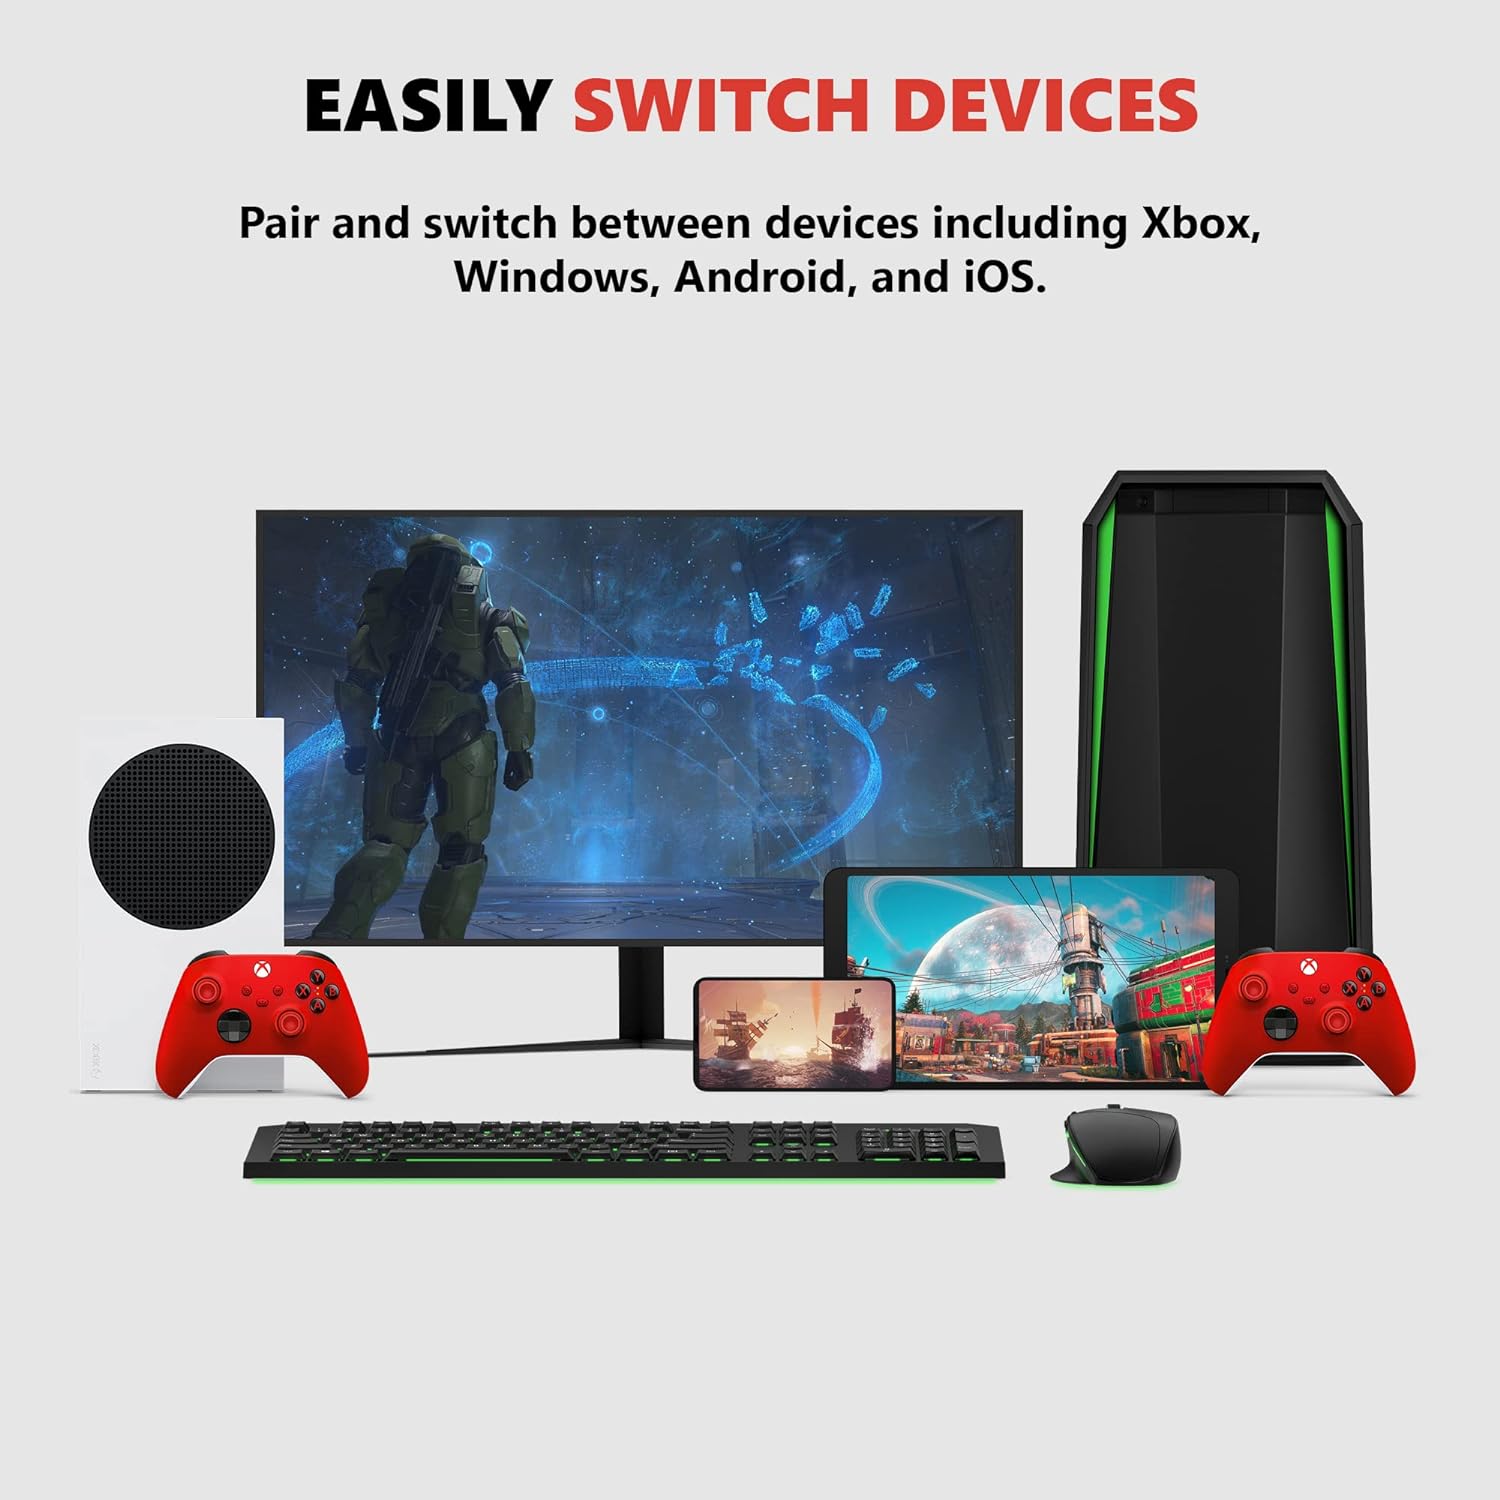 Microsoft Xbox Wireless Controller (Pulse Red)